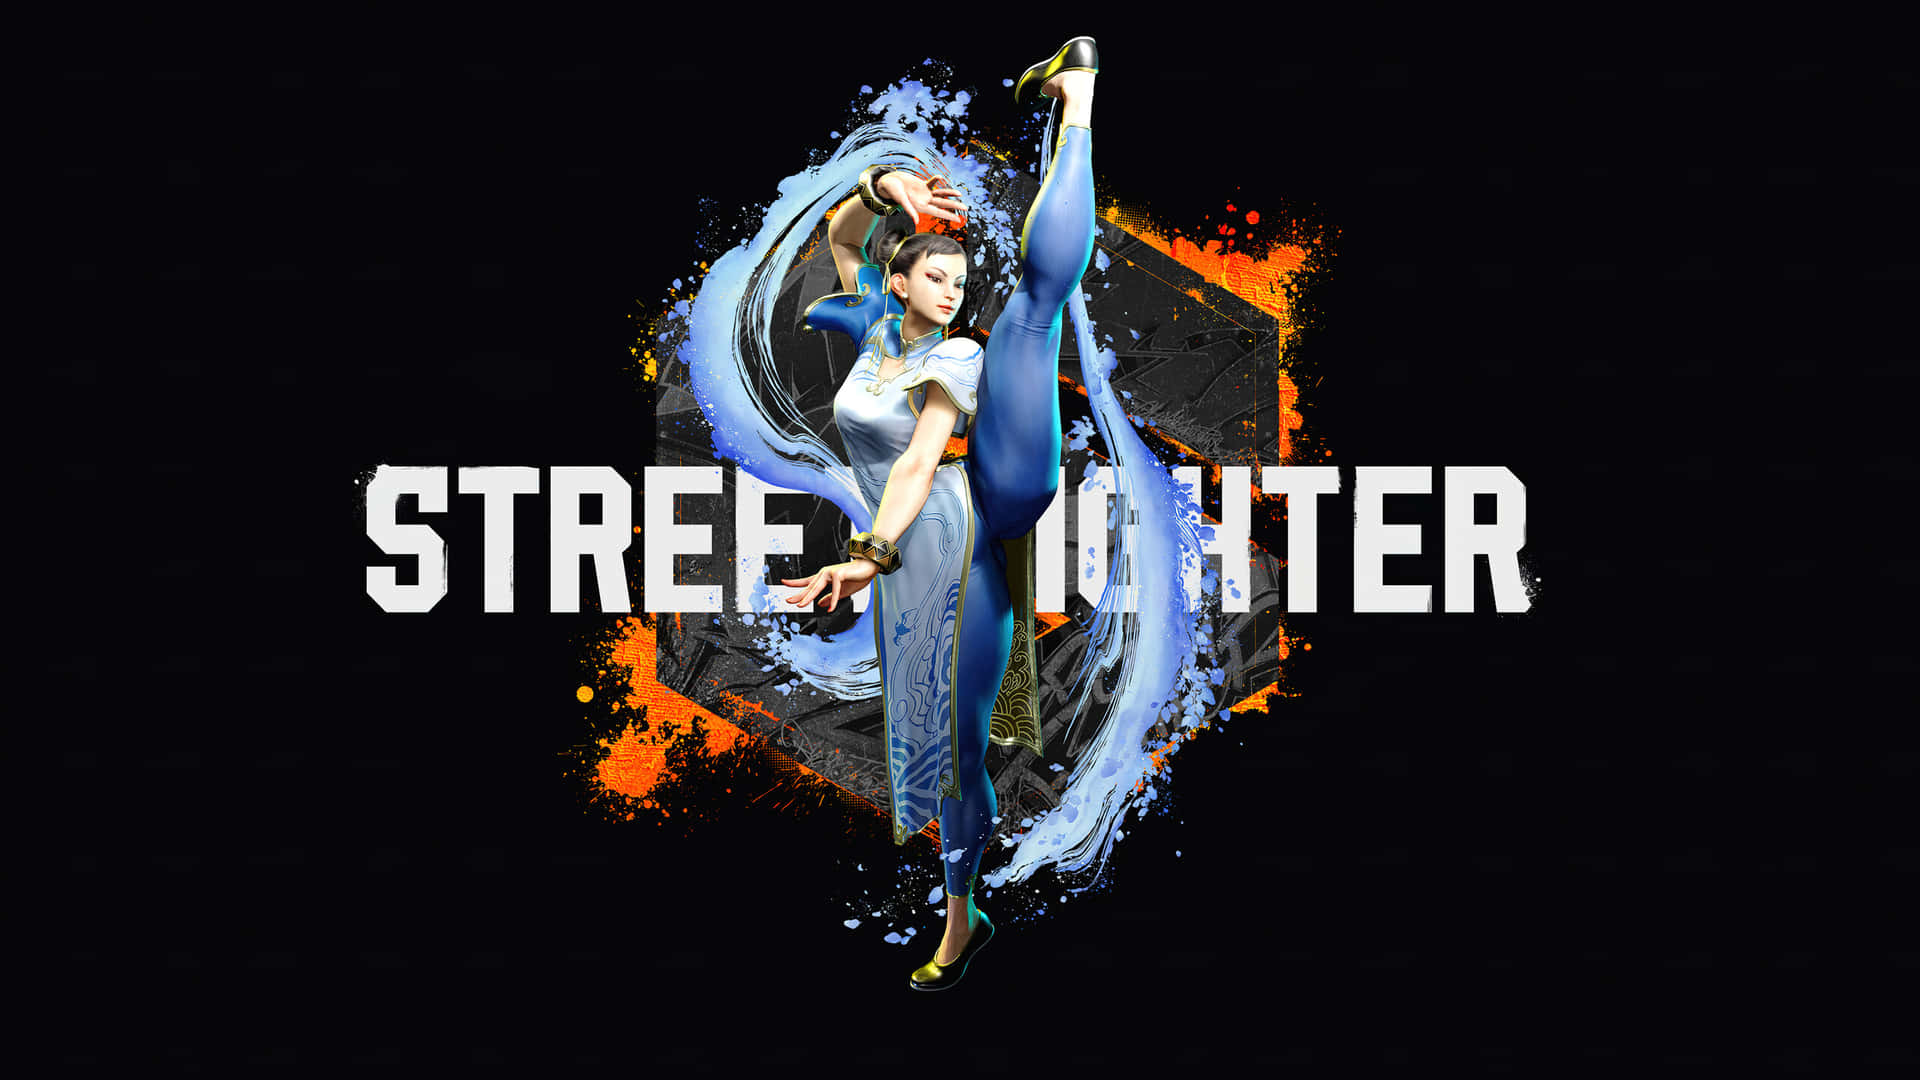 Chun Li Street Fighter Dynamic Pose Wallpaper